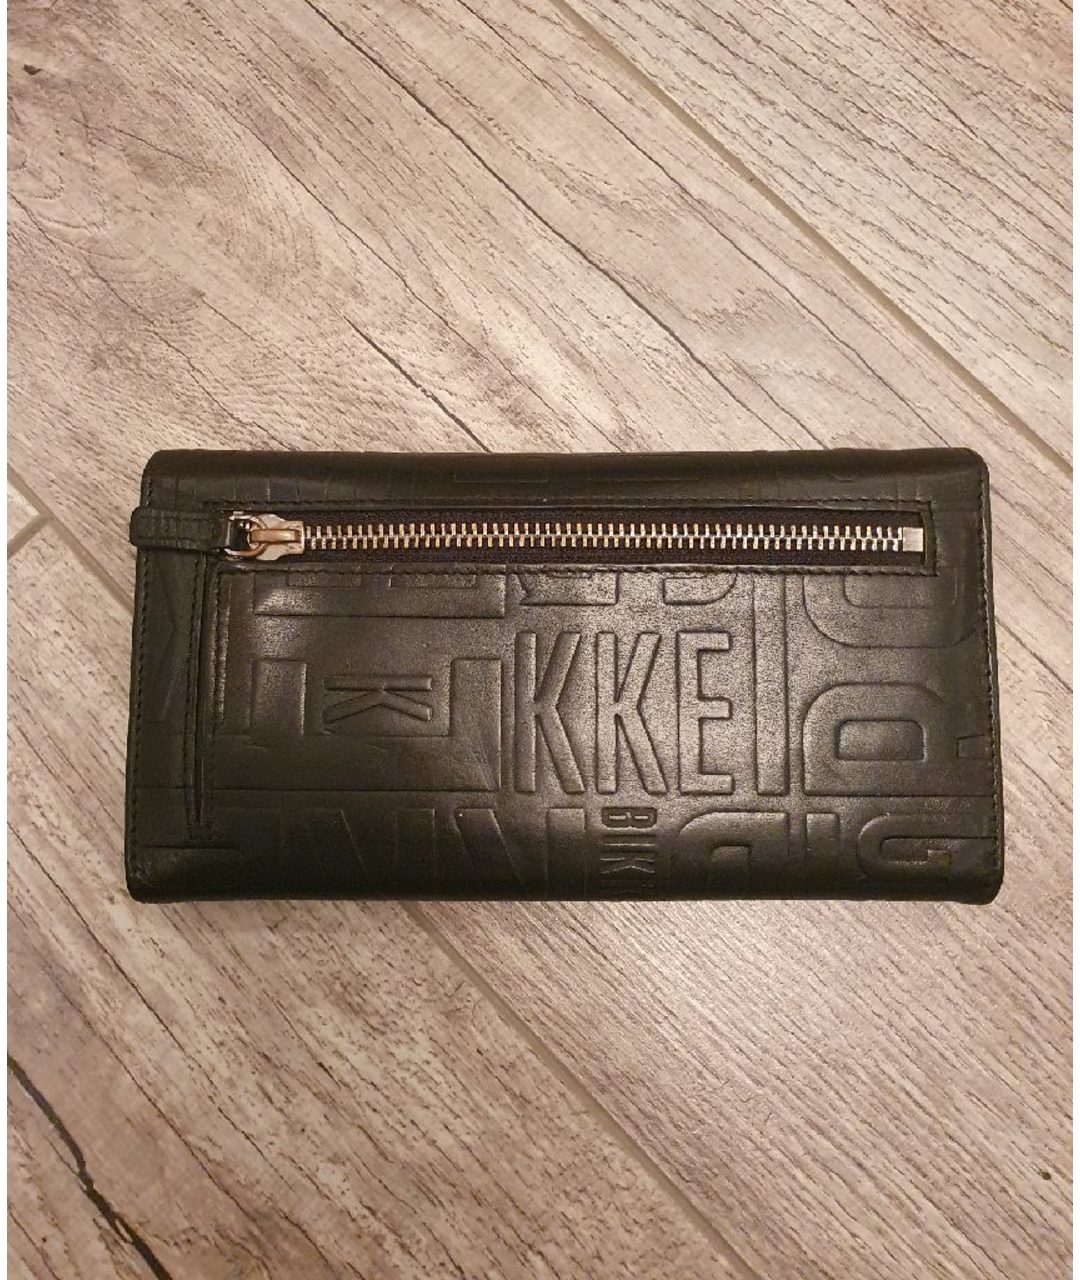 BIKKEMBERGS Черный кожаный кошелек, фото 2